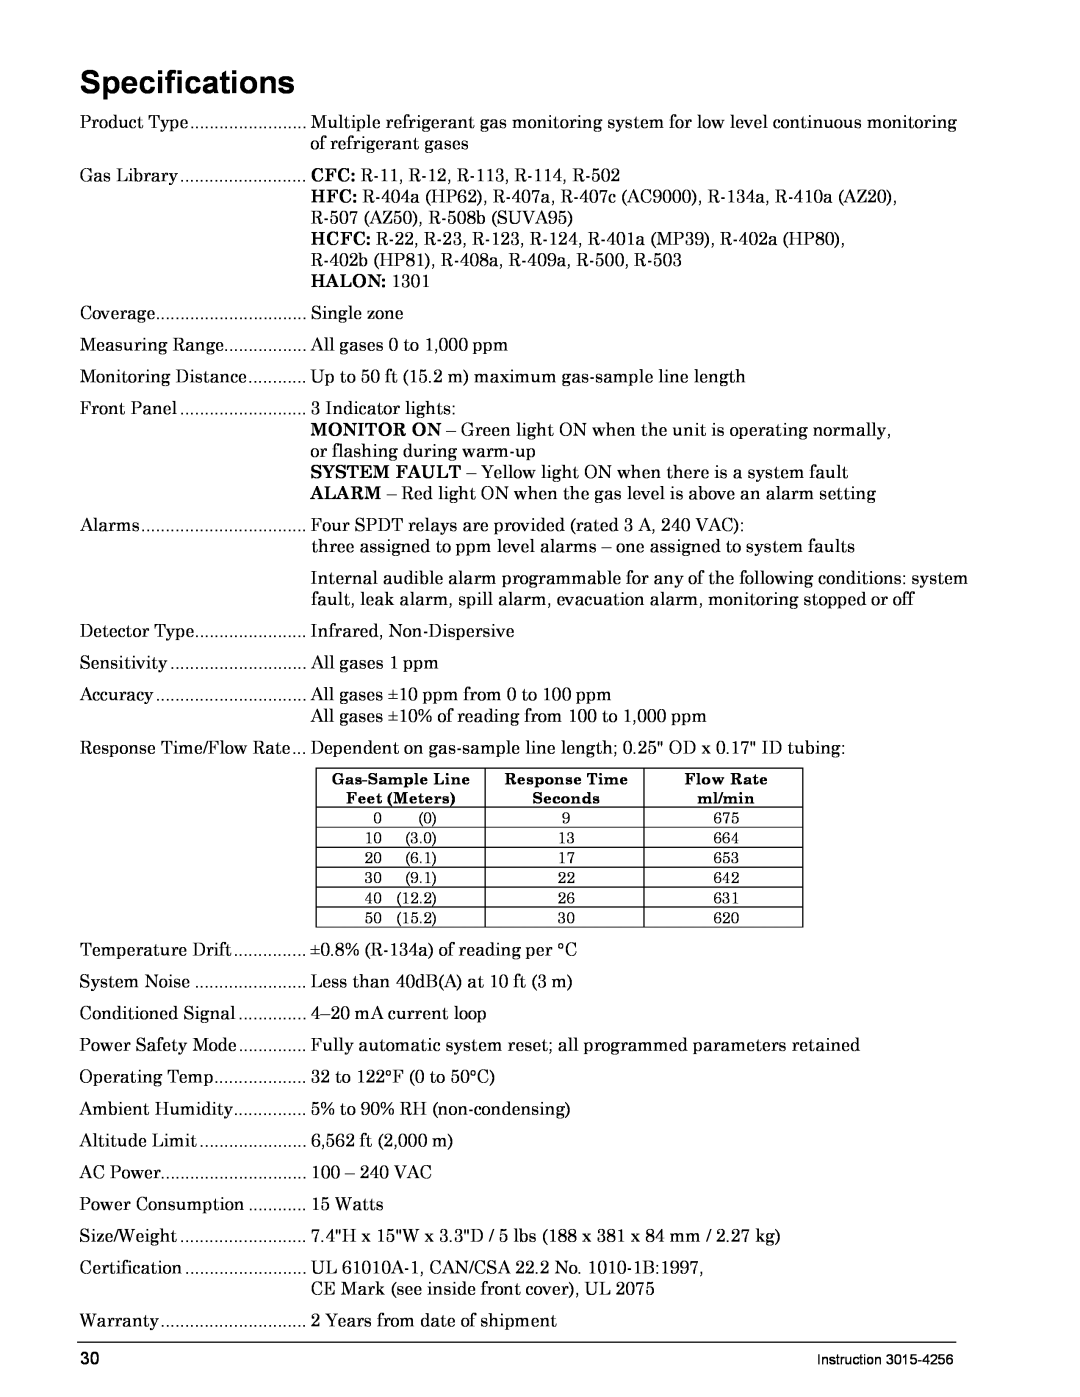 Bacharach 3015-4256 manual Specifications, Halon 